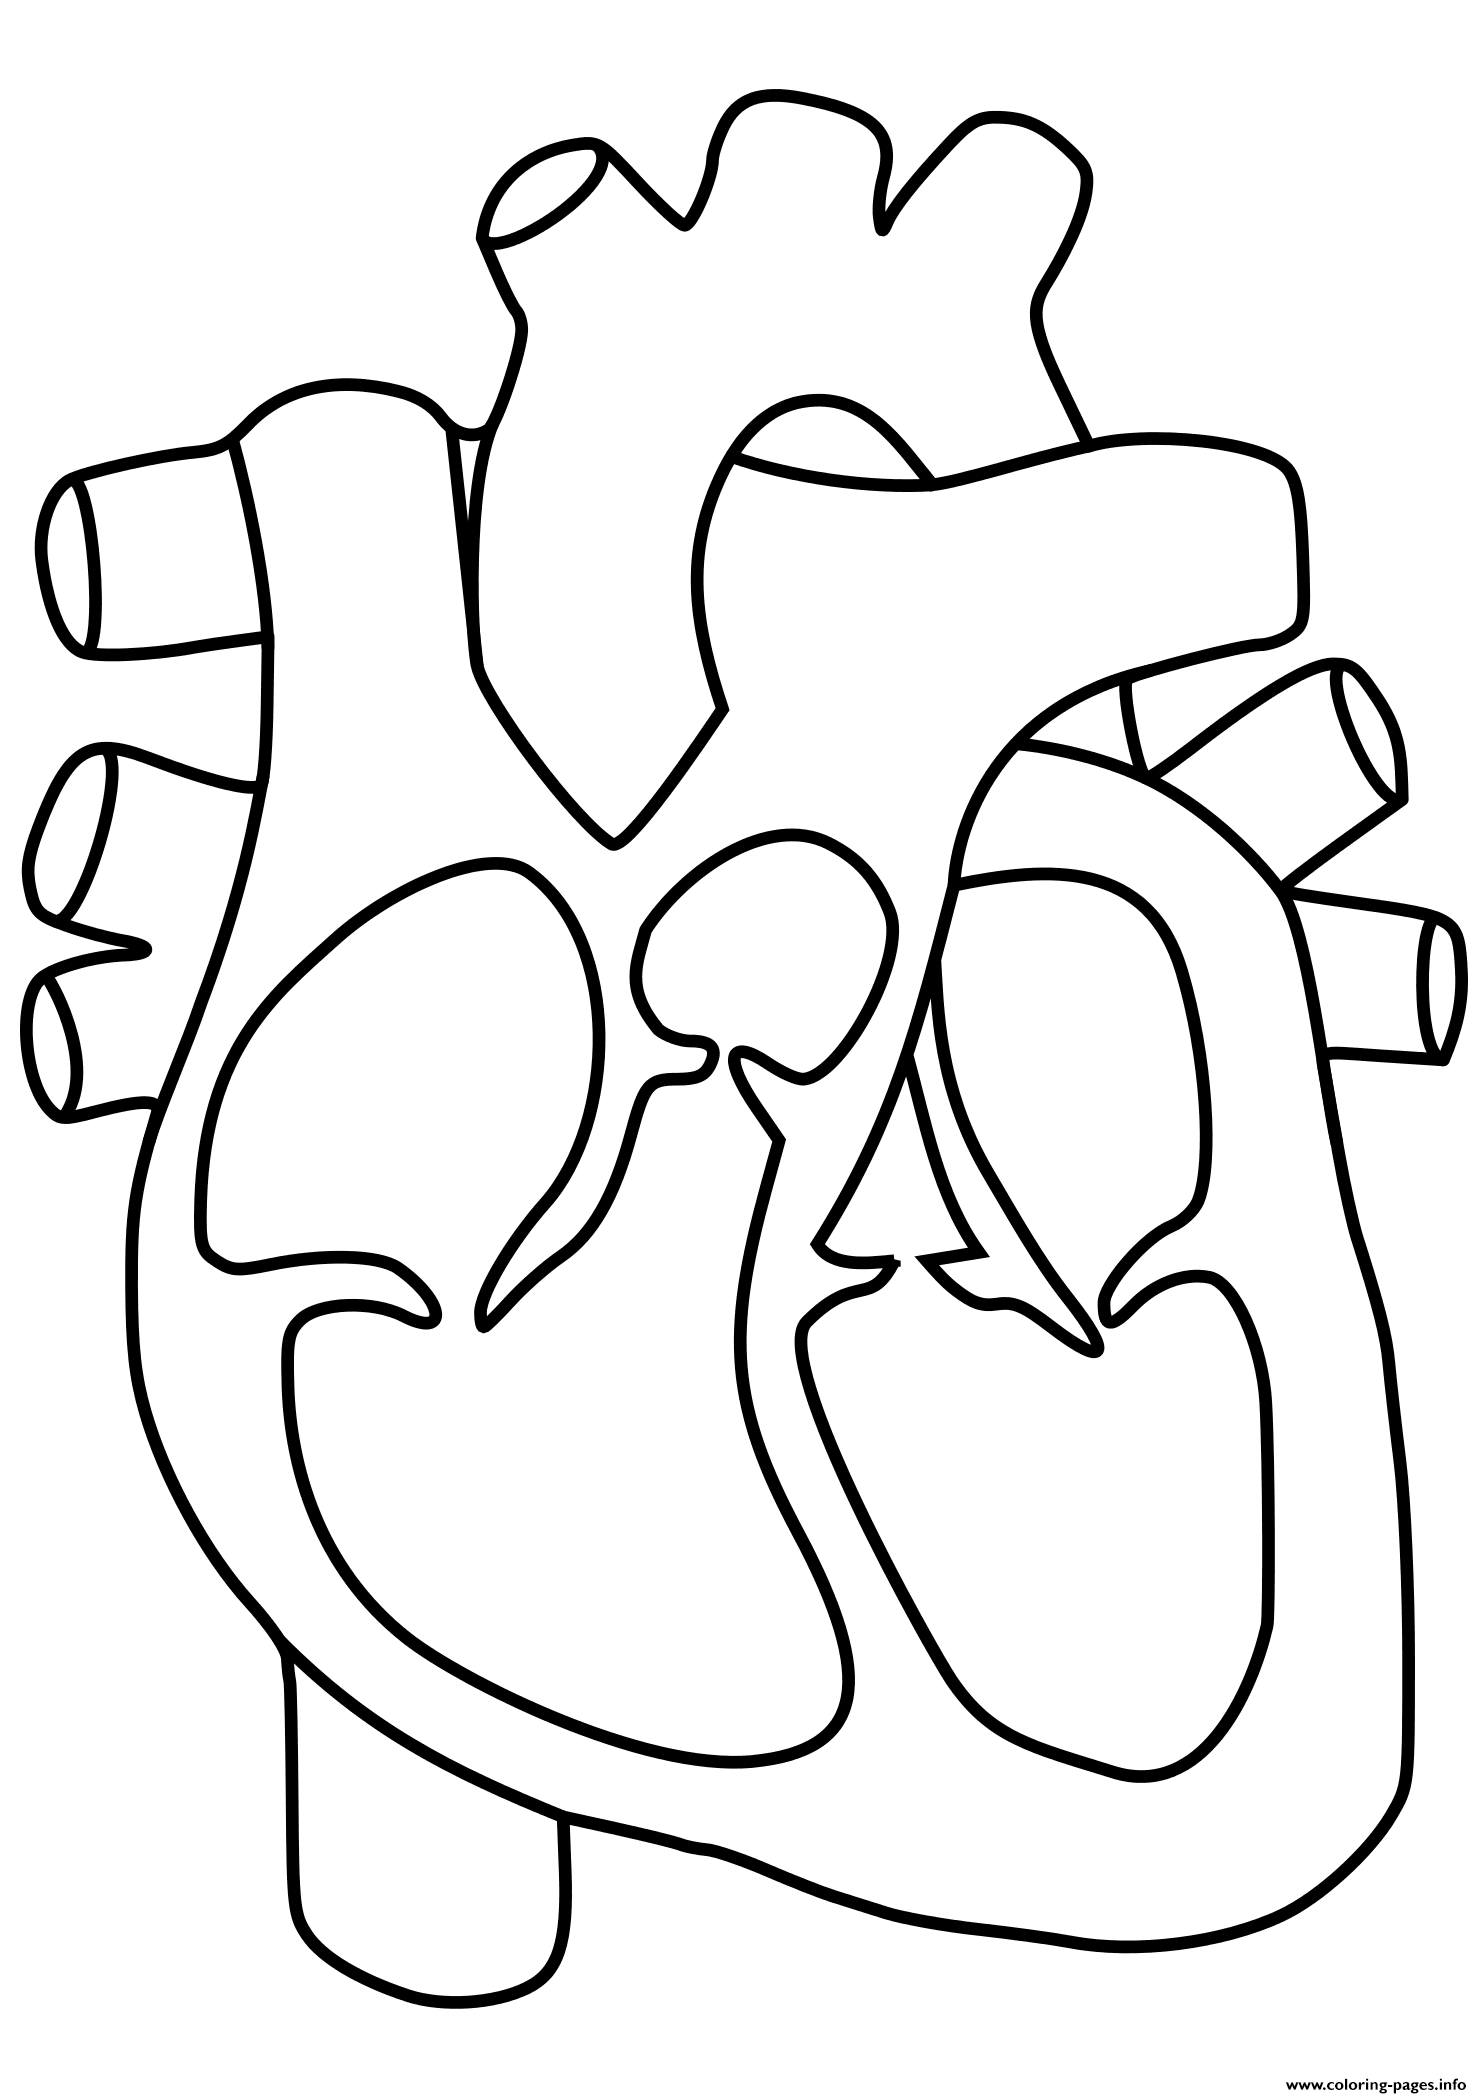 Human Heart coloring